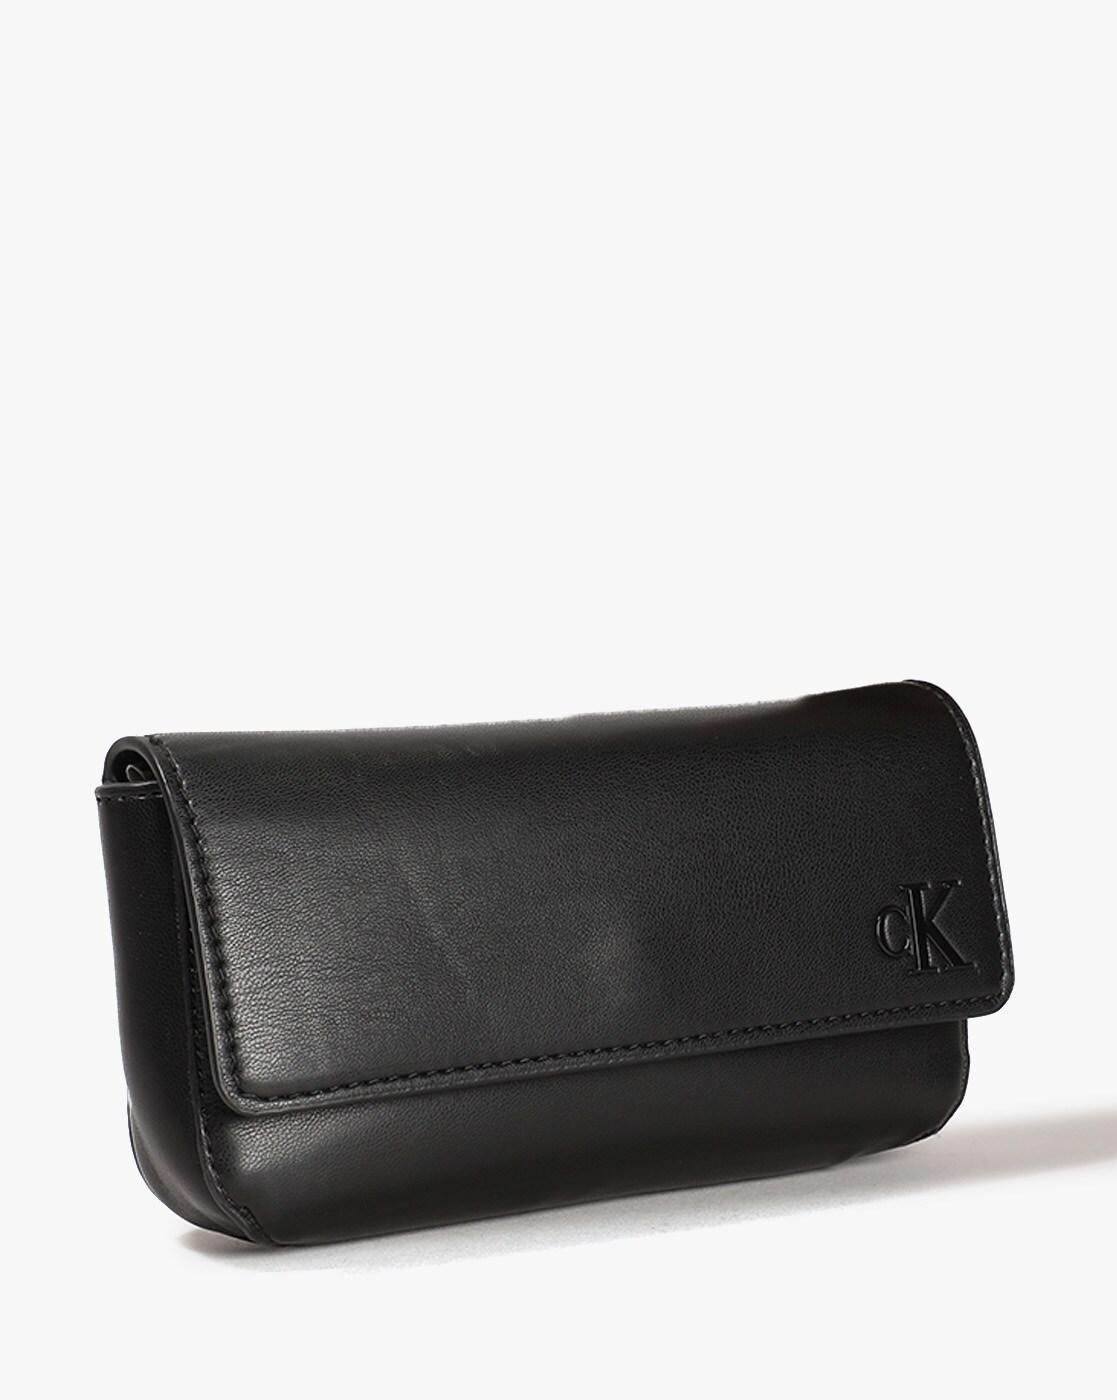 Calvin Klein Lock Leather Bucket Bag Black Limited Edition Gems MSRP $298  B4HP - Walmart.com